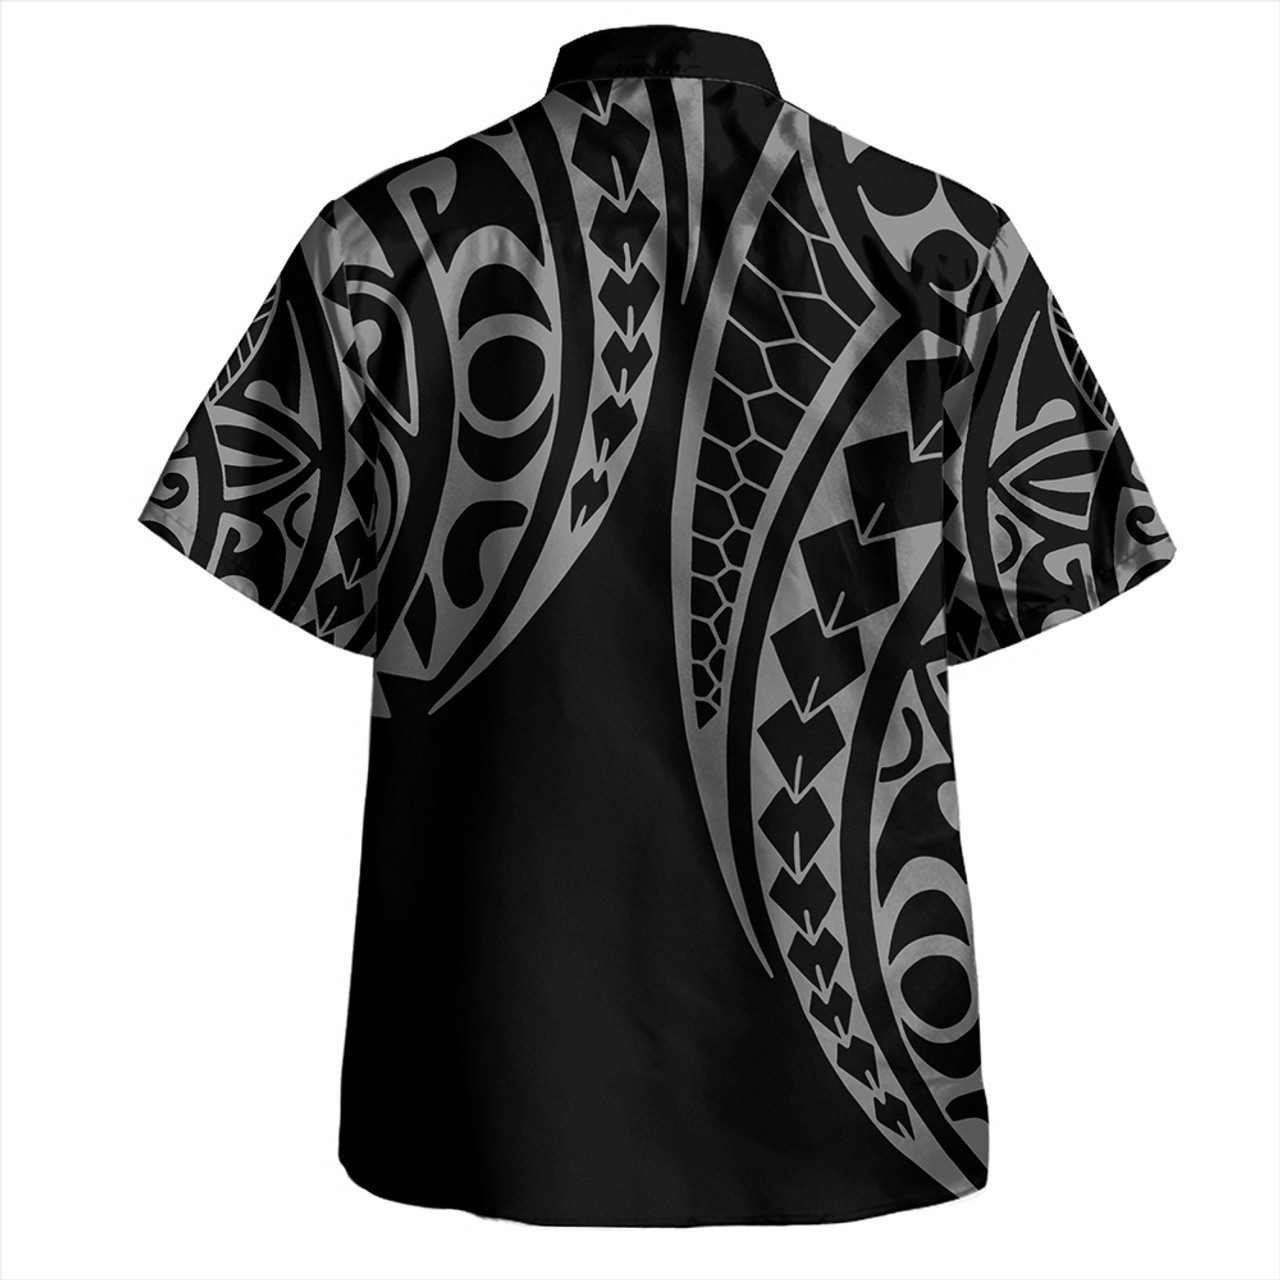 Marshall Islands Combo Short Sleeve Dress And Shirt Kakau Style White